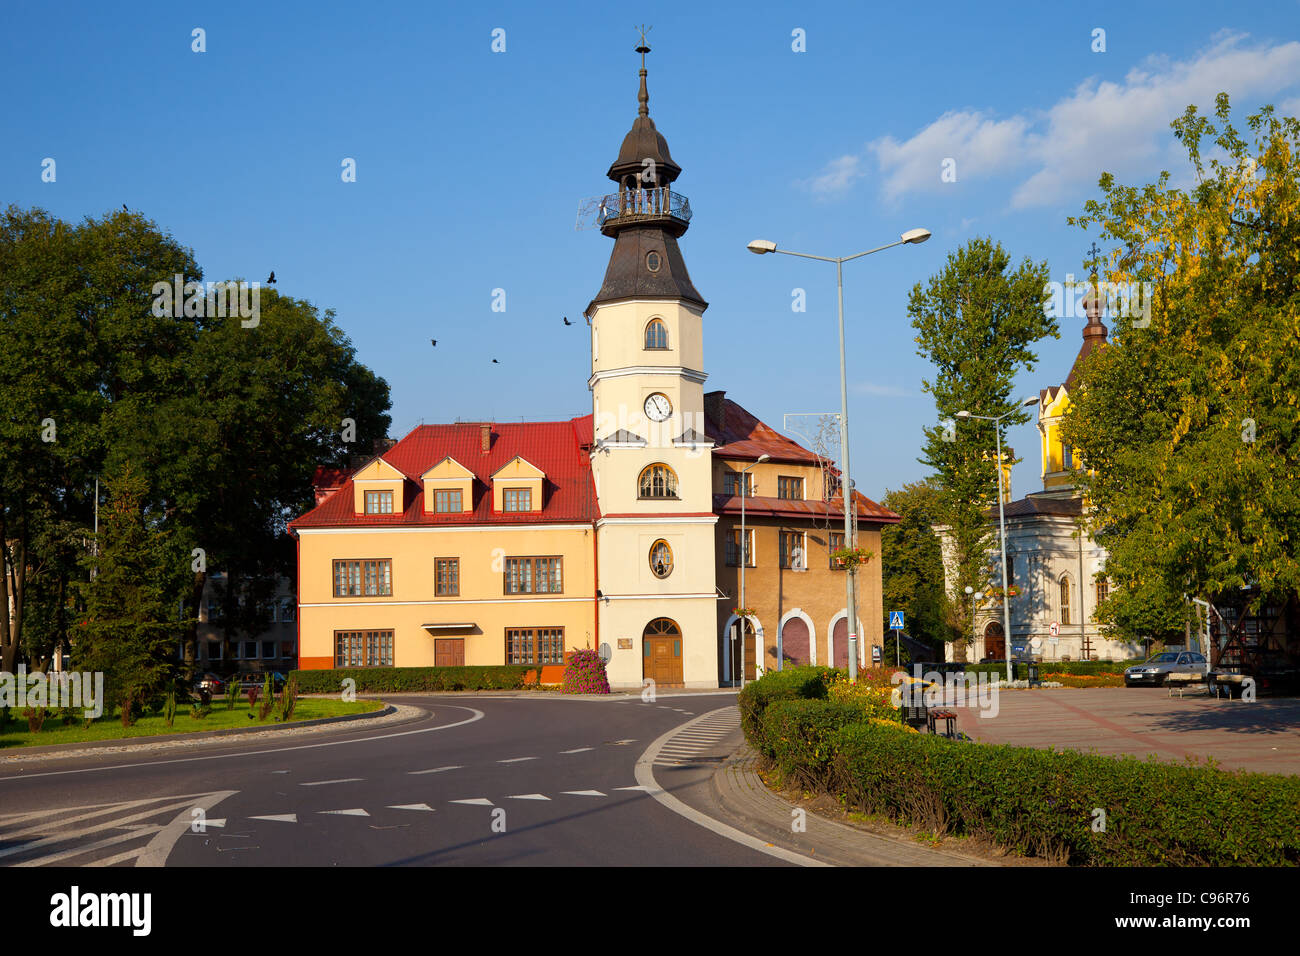 Ehemaligen Rathaus in Tomaszów Lubelski, Polen. Stockfoto